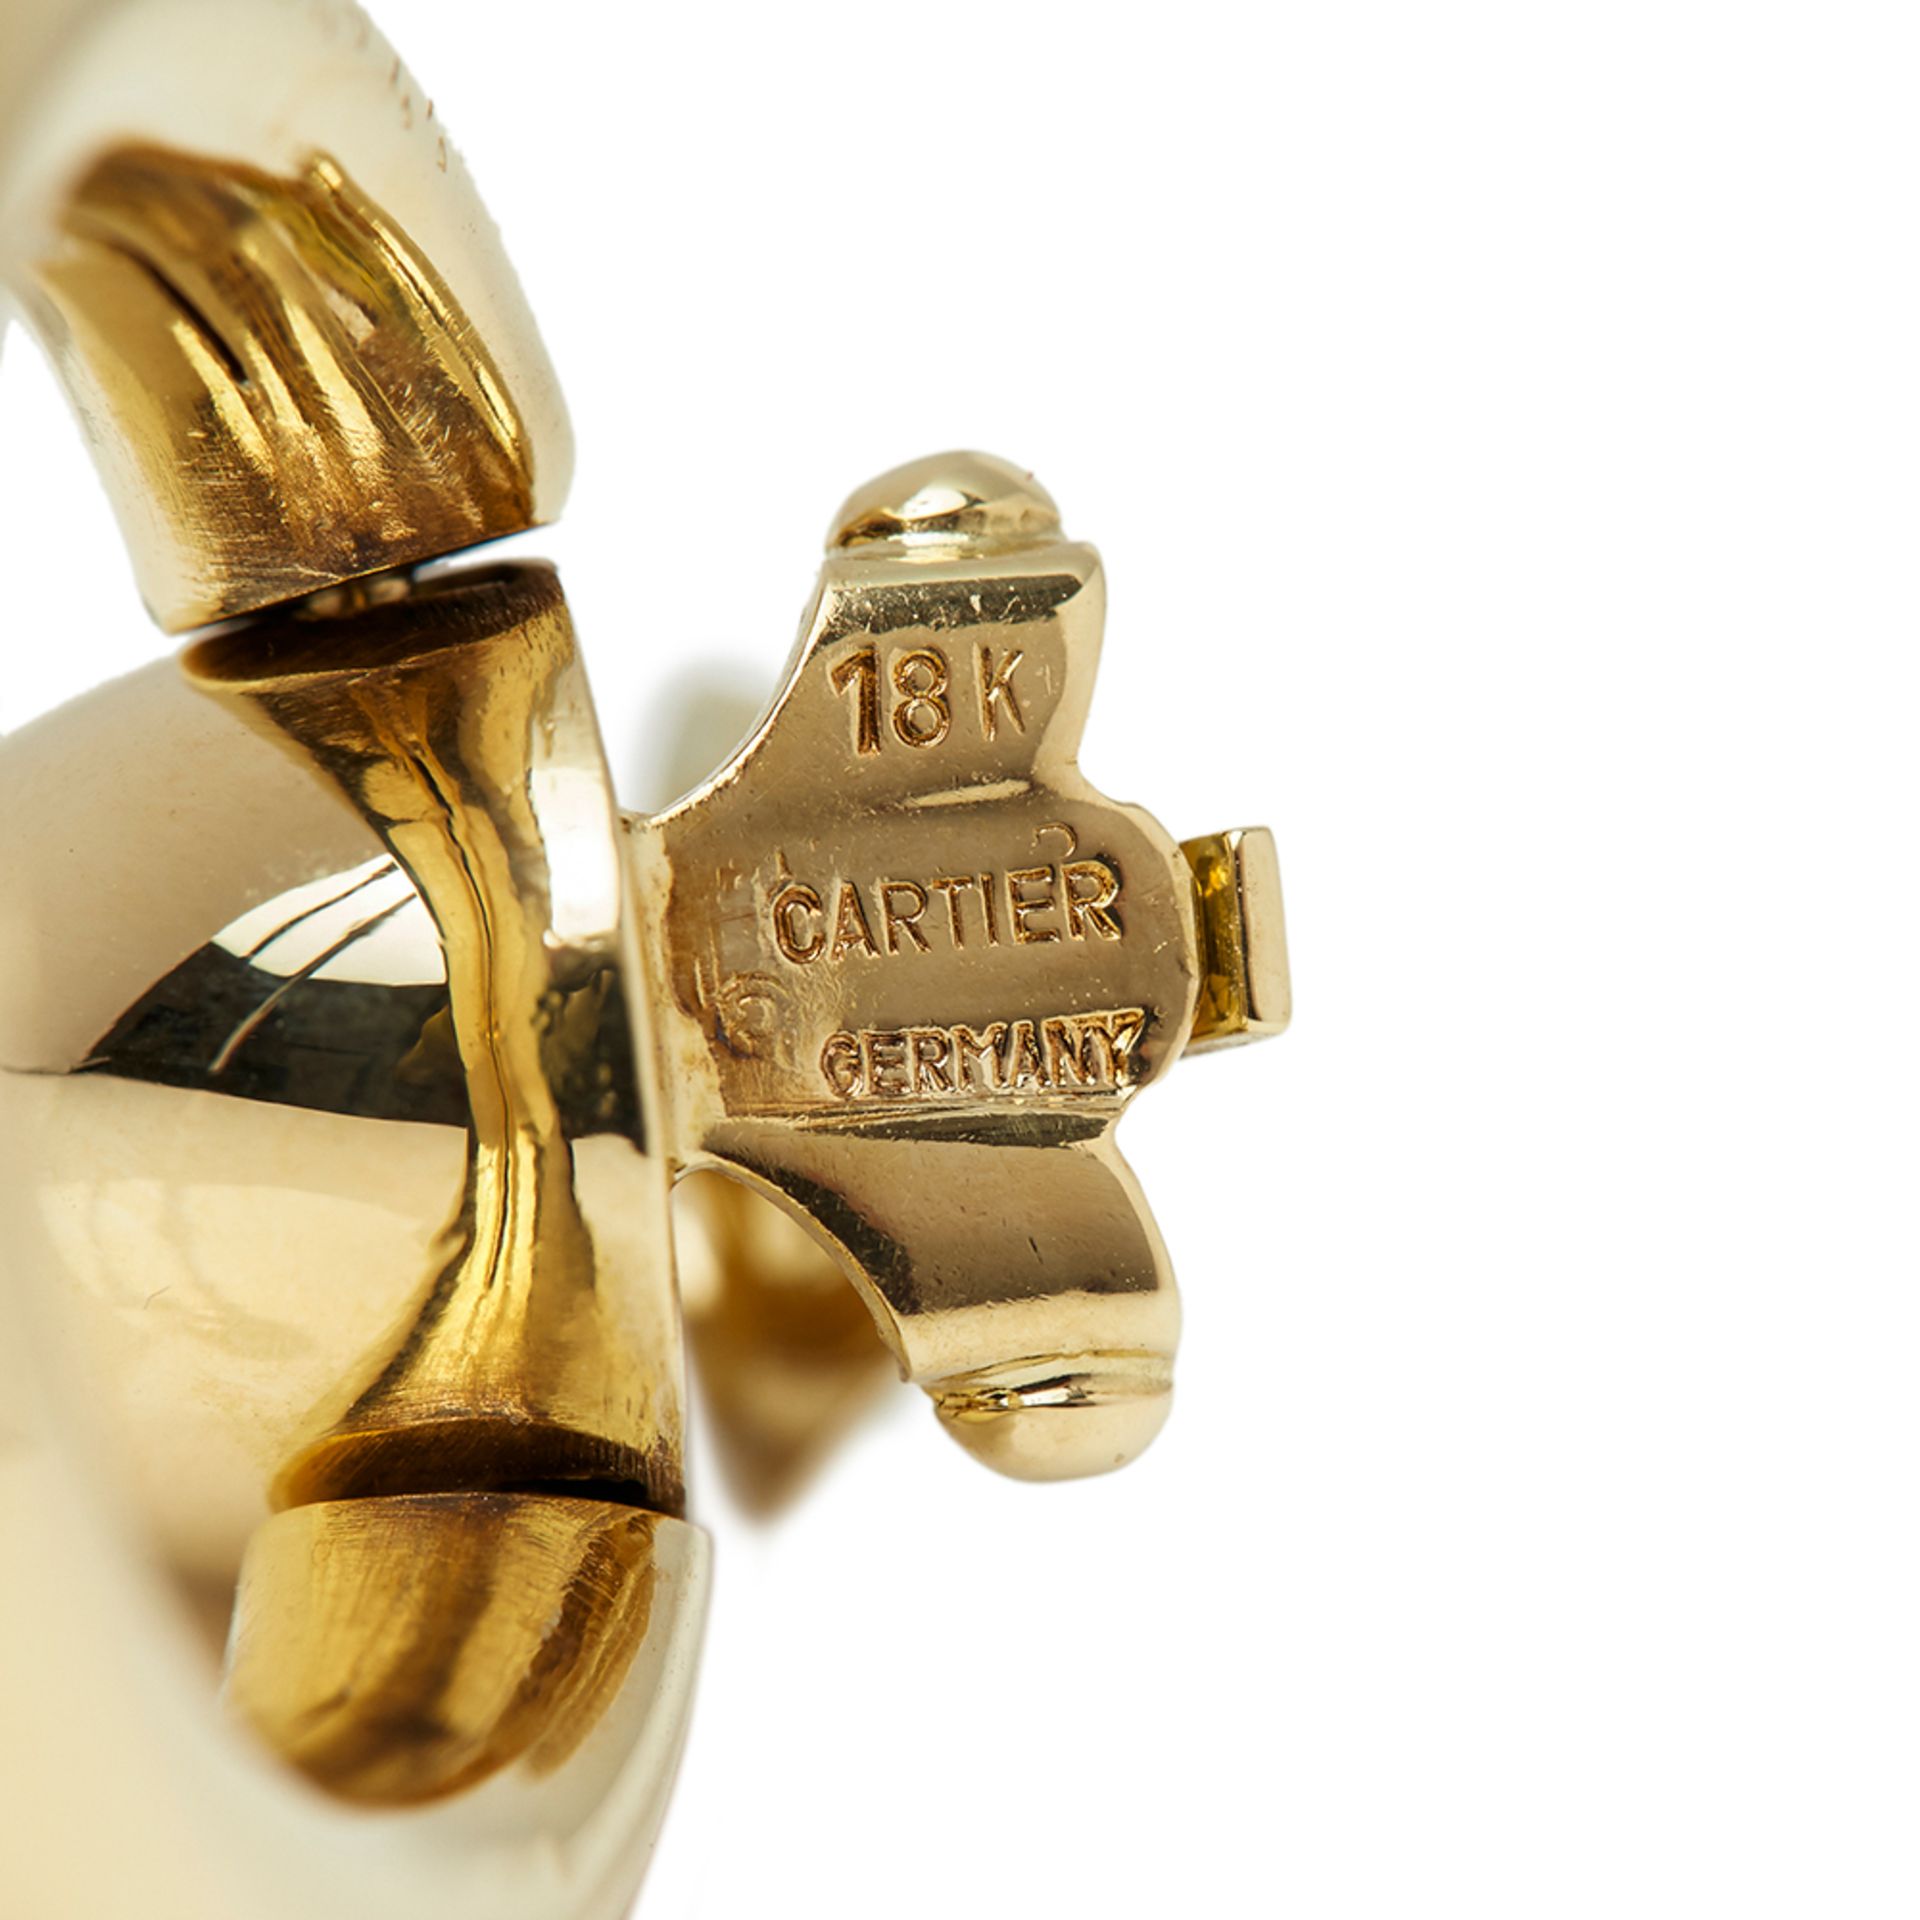 Cartier 18k Yellow Gold Door Knocker Clip-On Earrings - Image 3 of 7